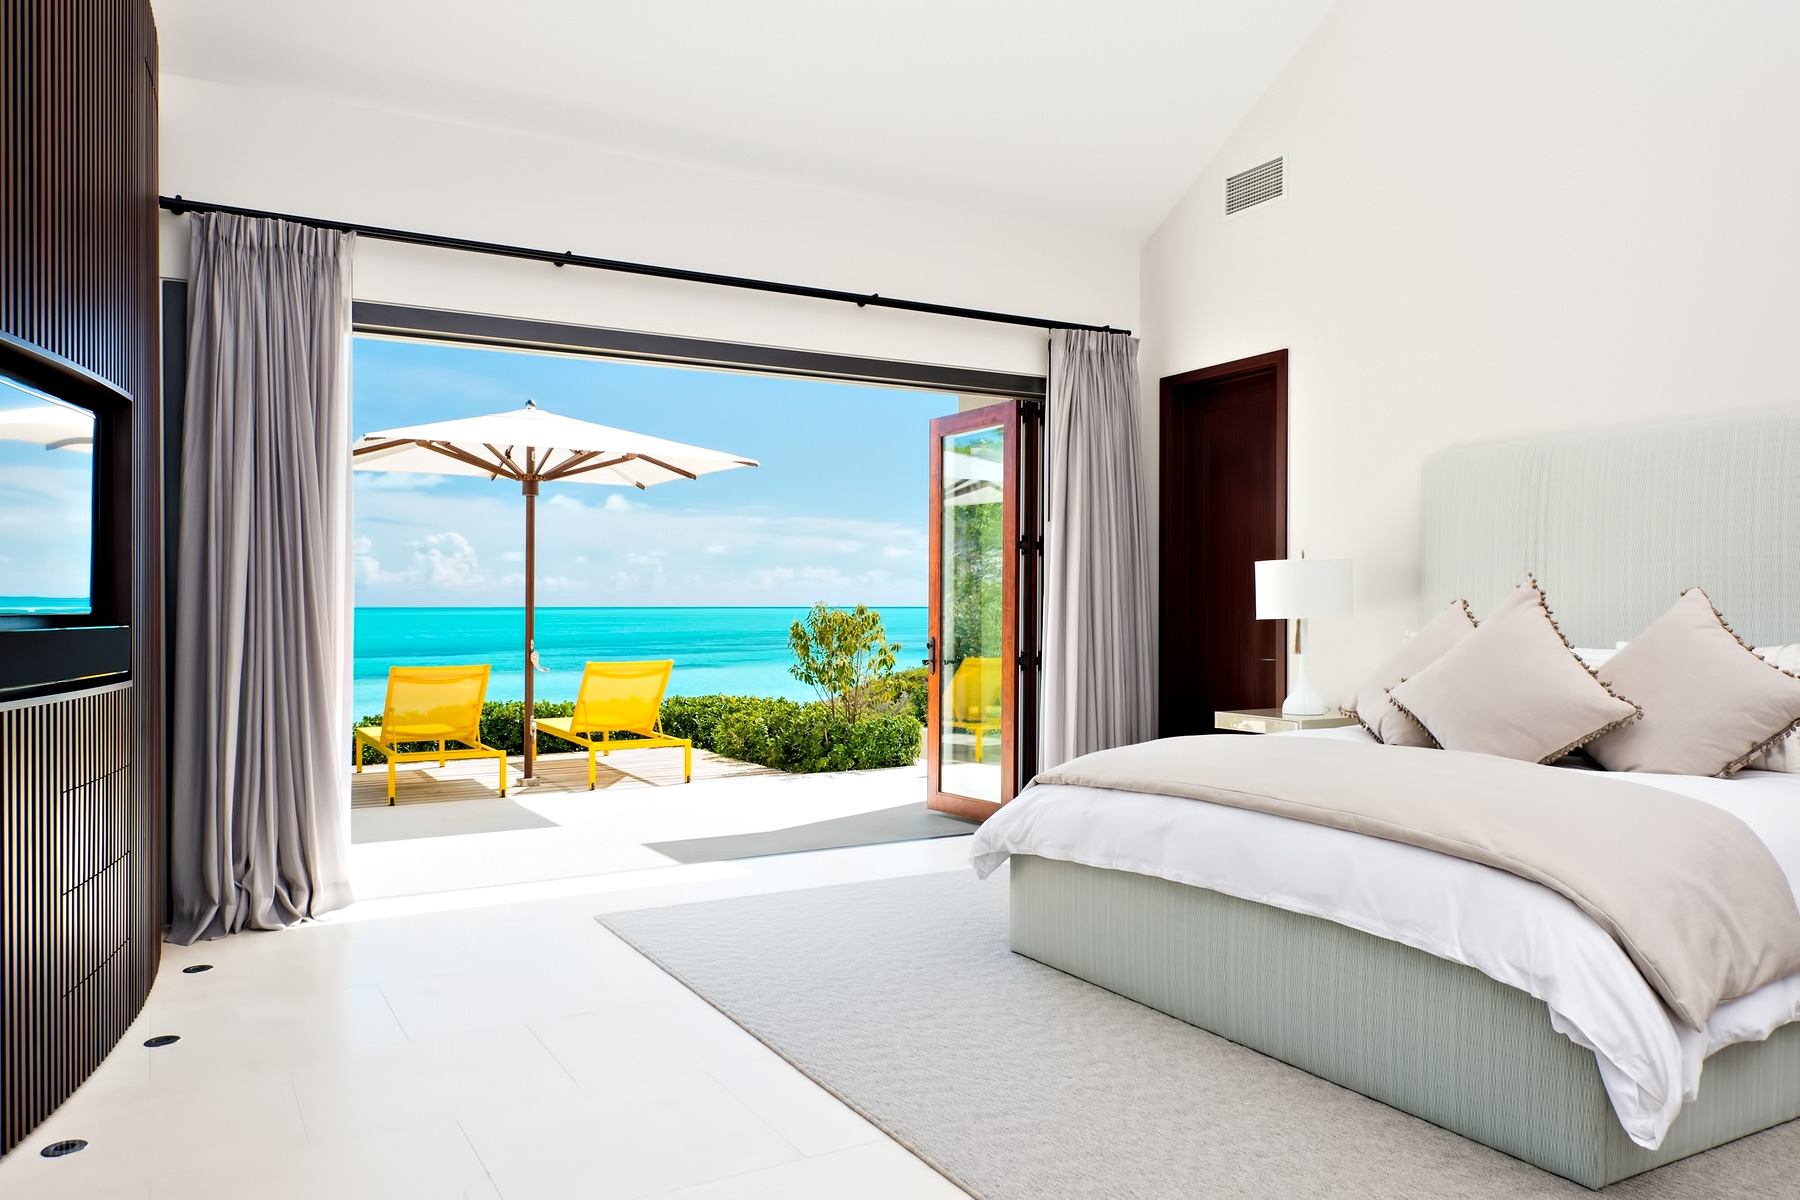 Turtle Tail Luxury Estate Villa – Providenciales, Turks and Caicos Islands